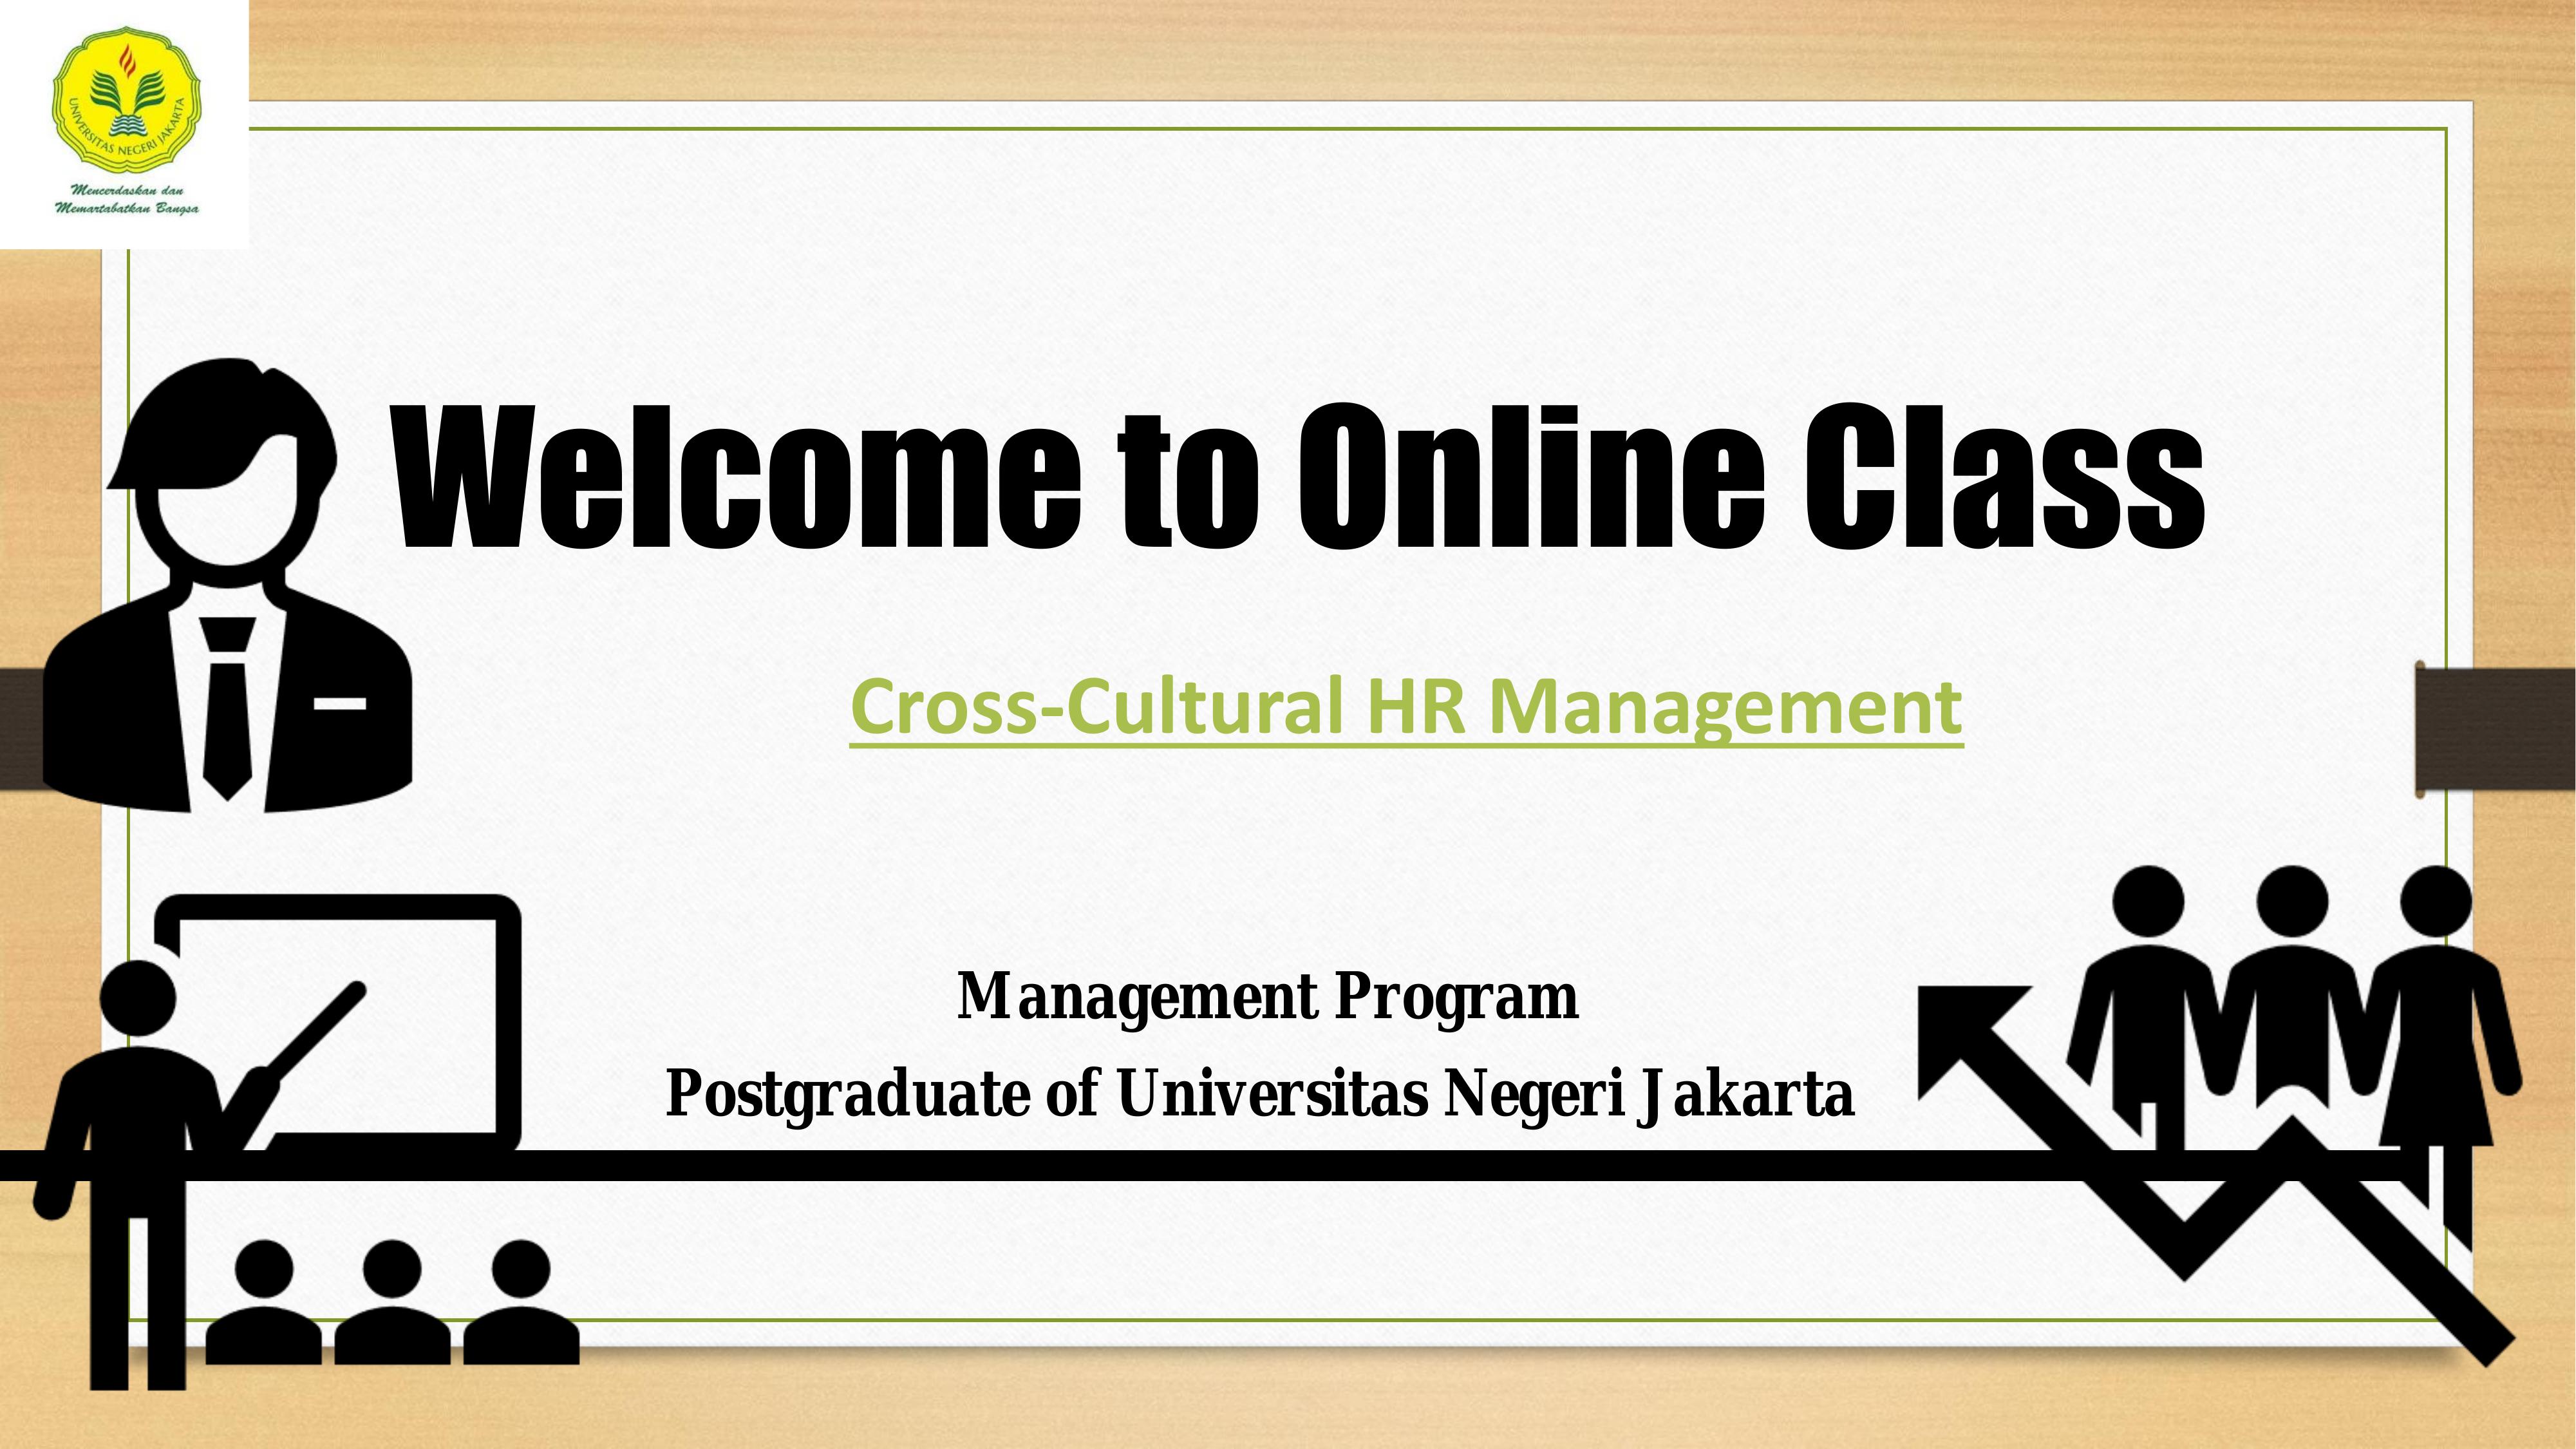 Cross-Cultural HR Management